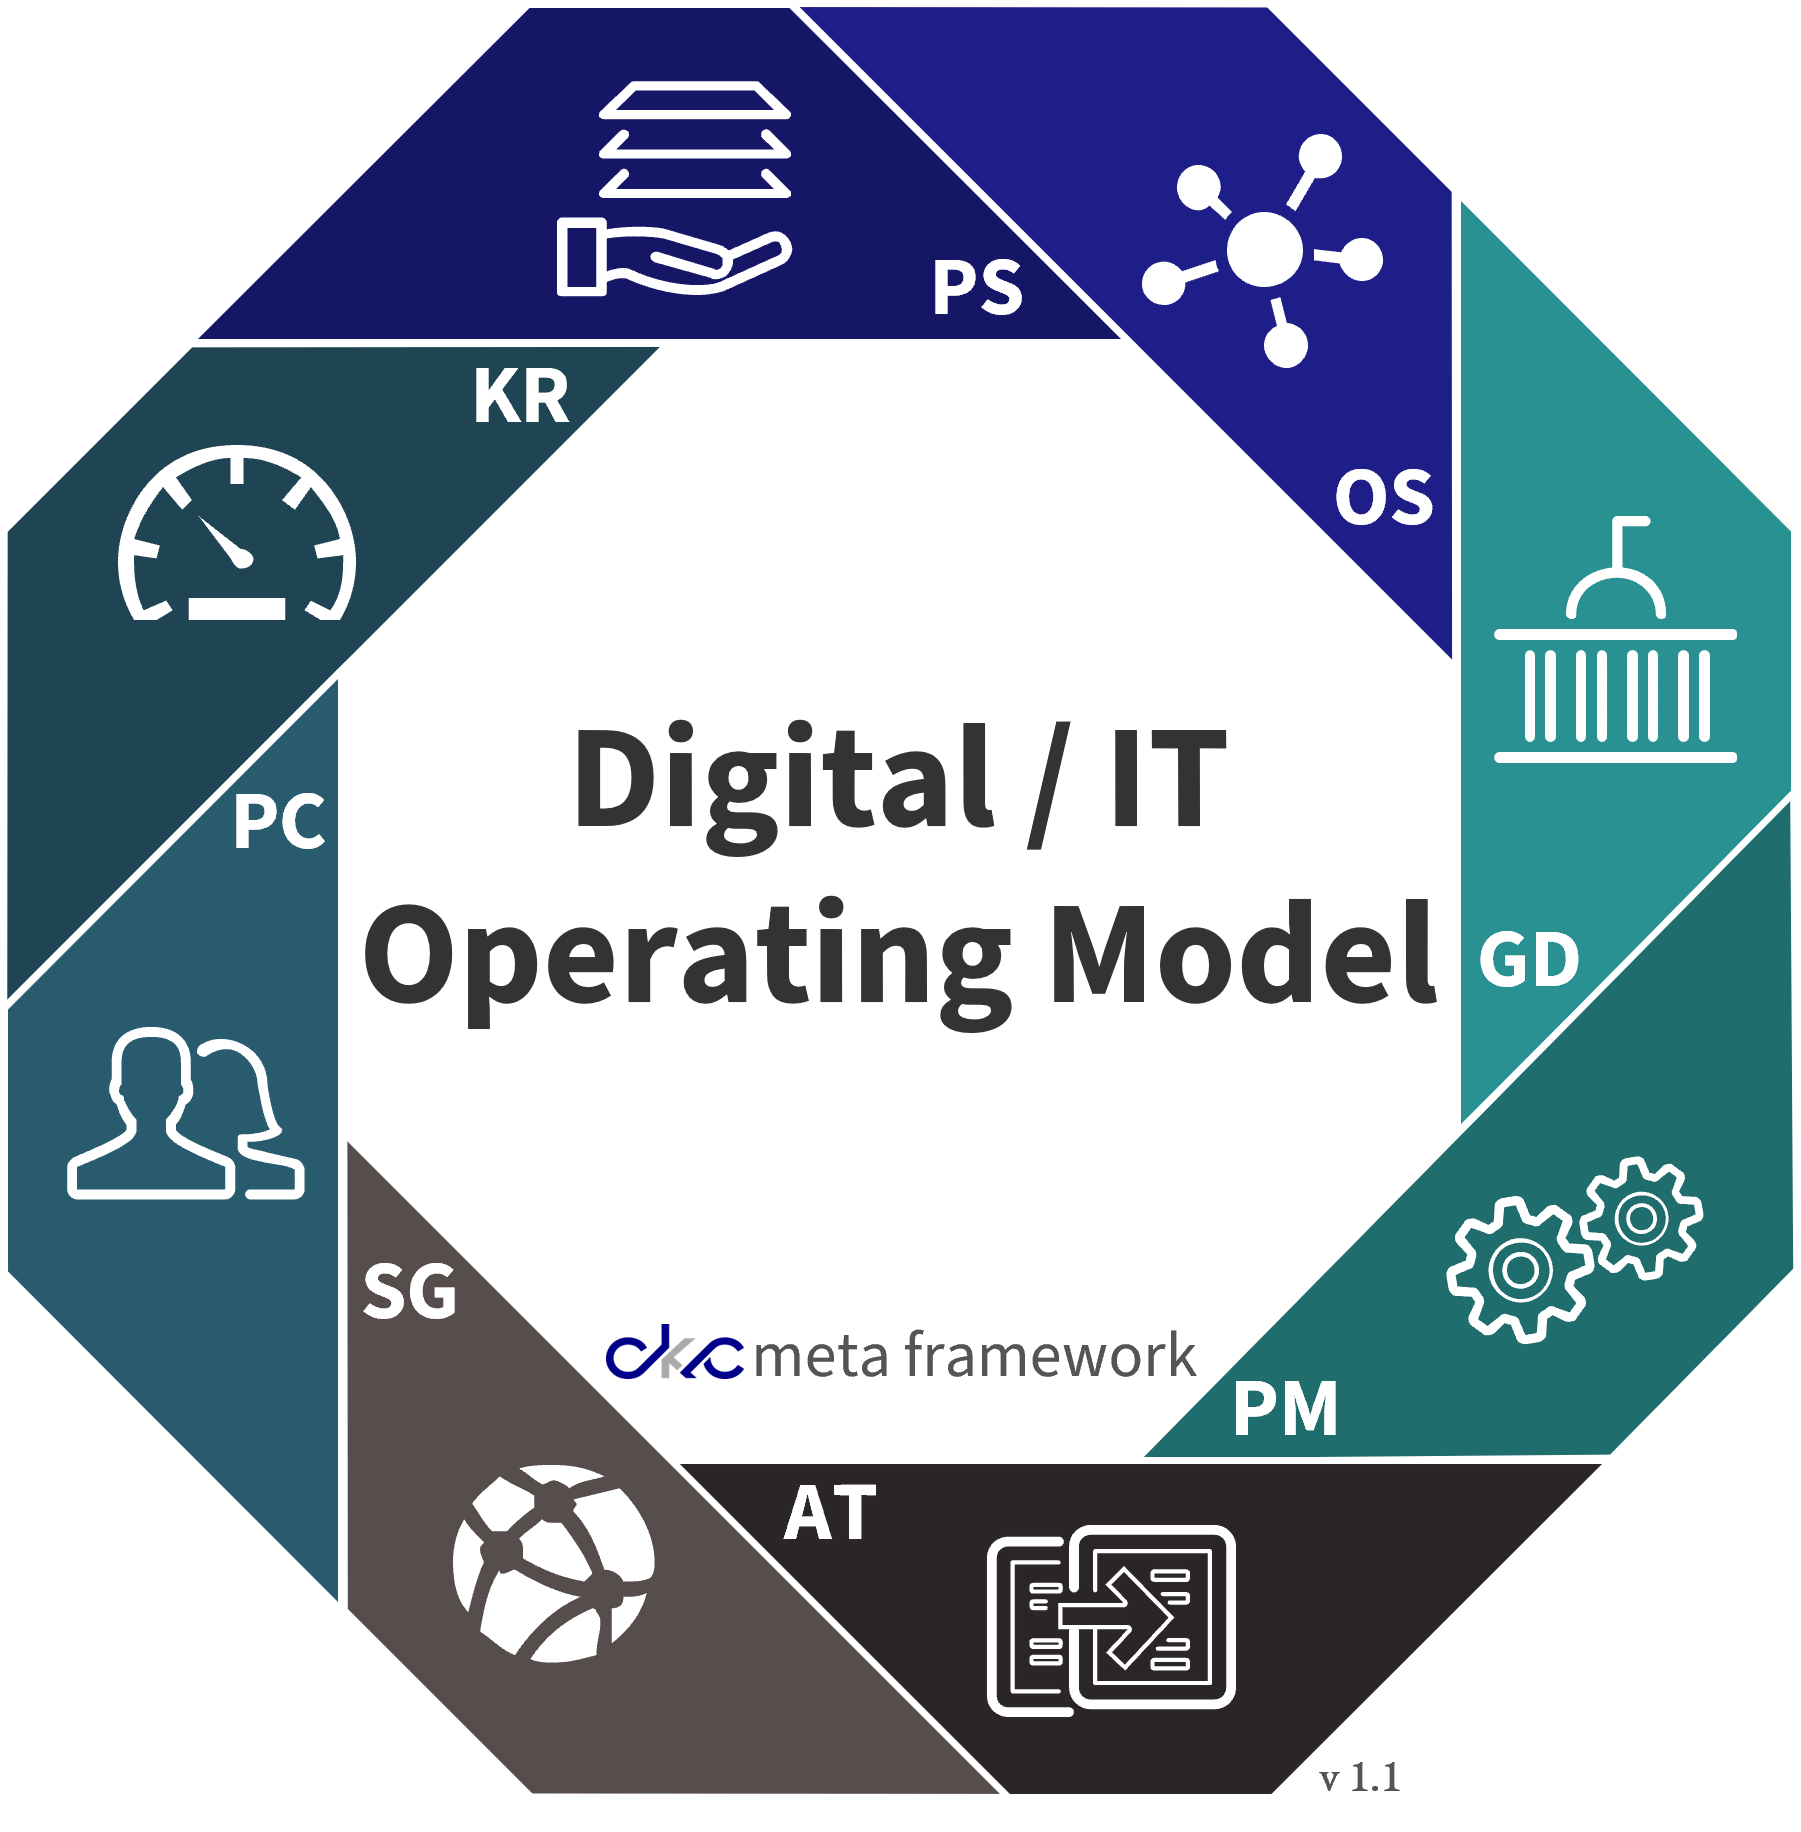 CKC - Digital IT Operating Model Framework with 8 dimensions